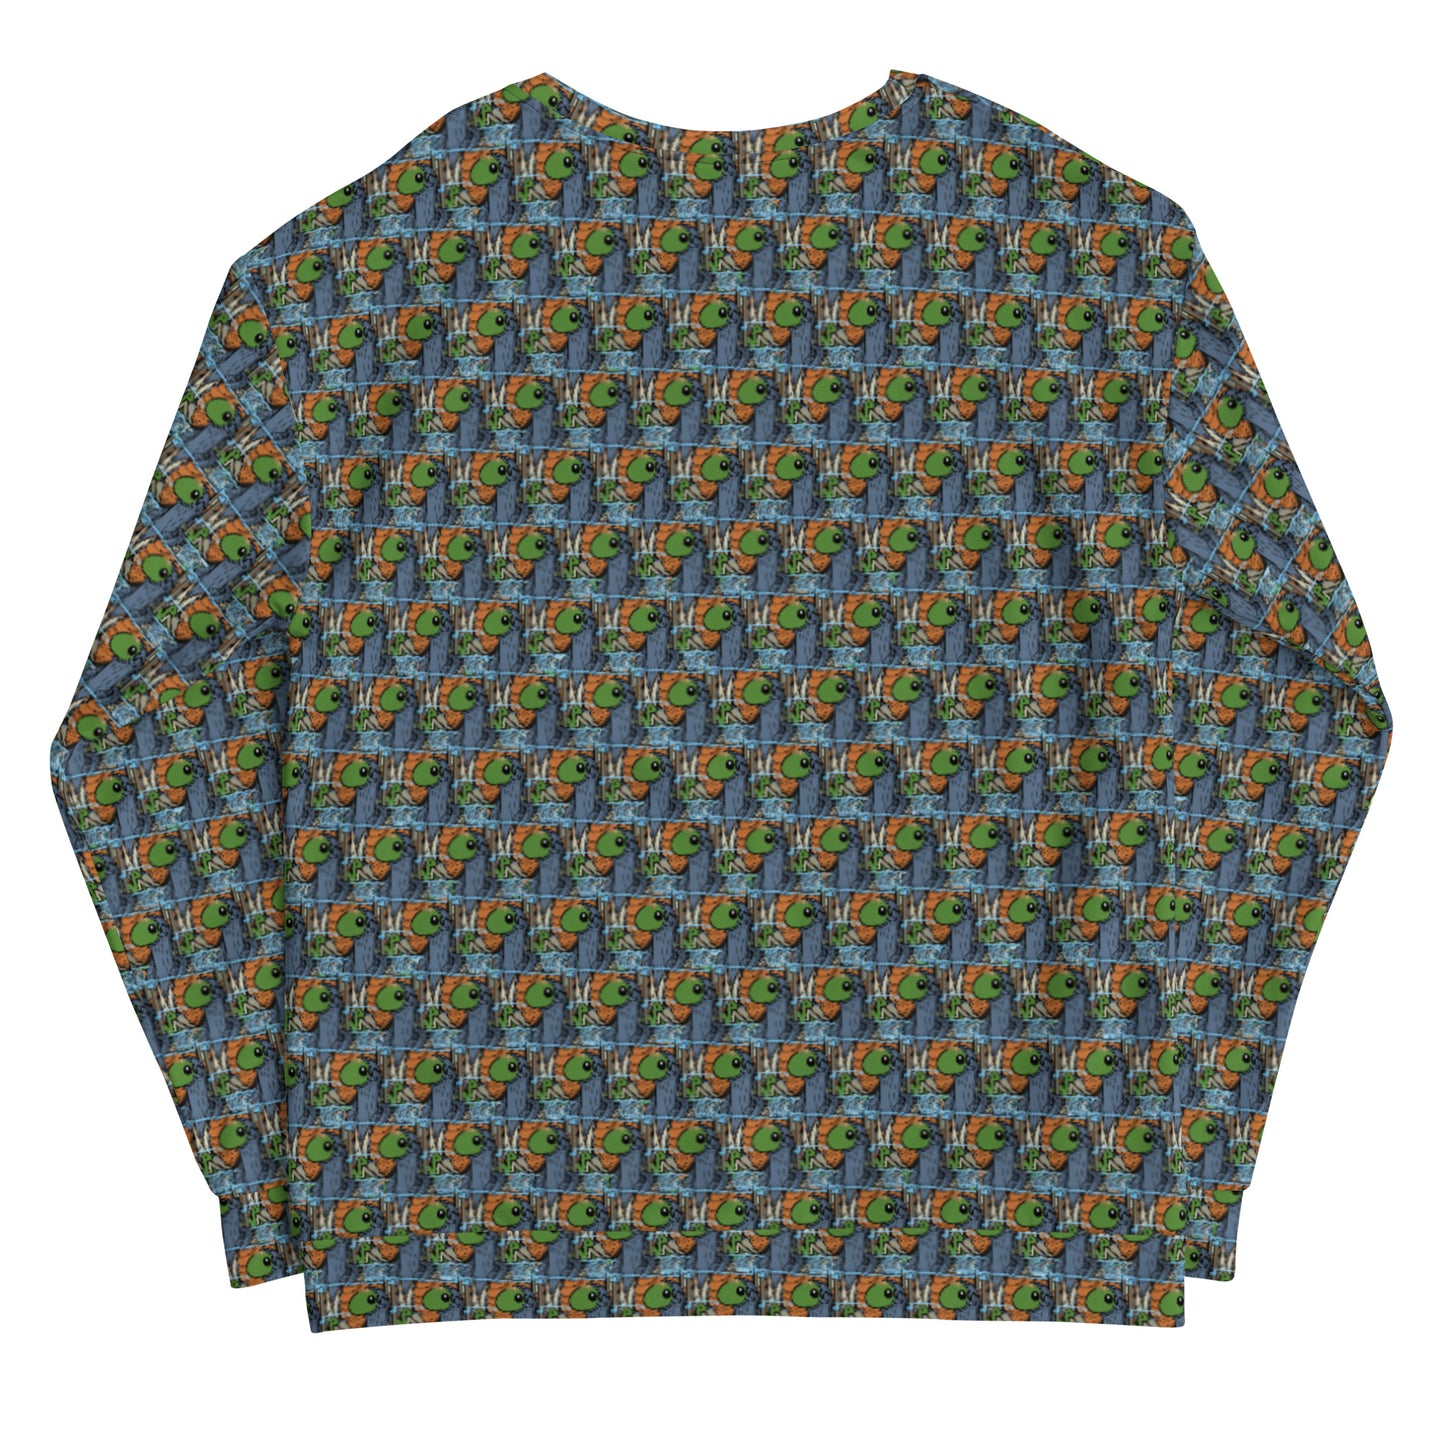 Watson Nessie All-Over Print Sweatshirt/Jumper (Apex Legends)